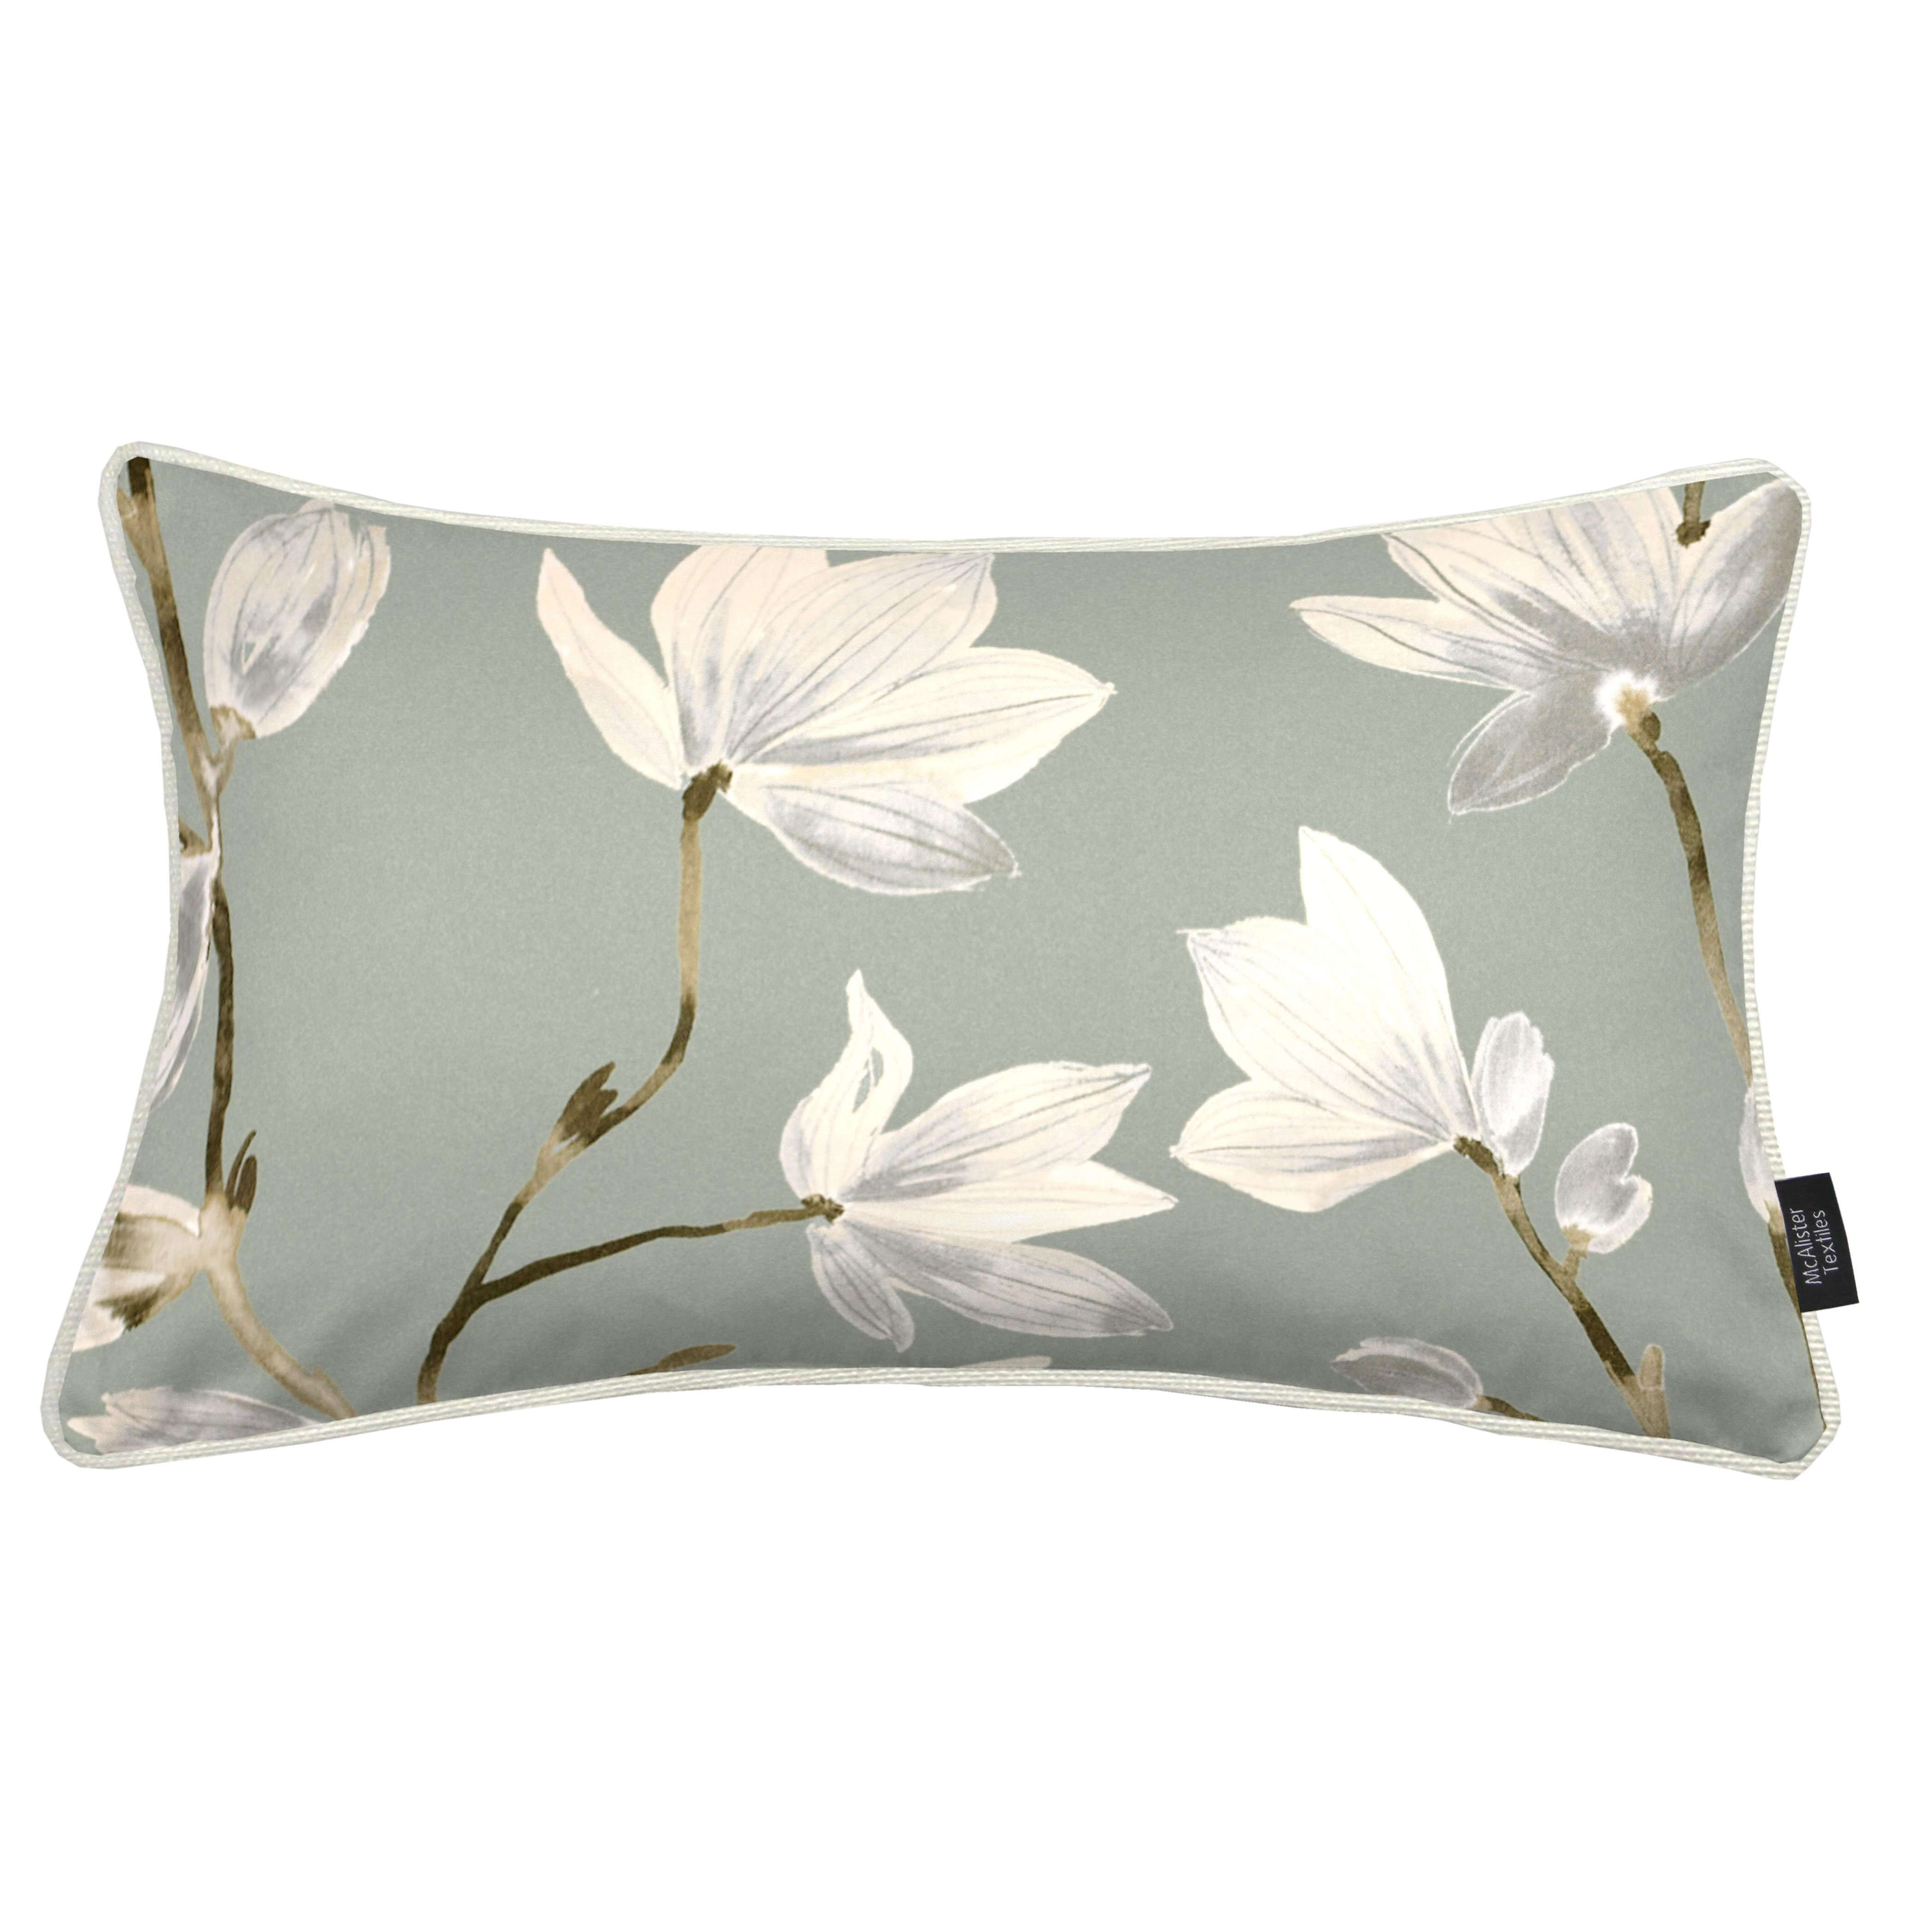 Magnolia Duck Egg Floral Cotton Print Pillows, Cover Only / 60cm x 40cm